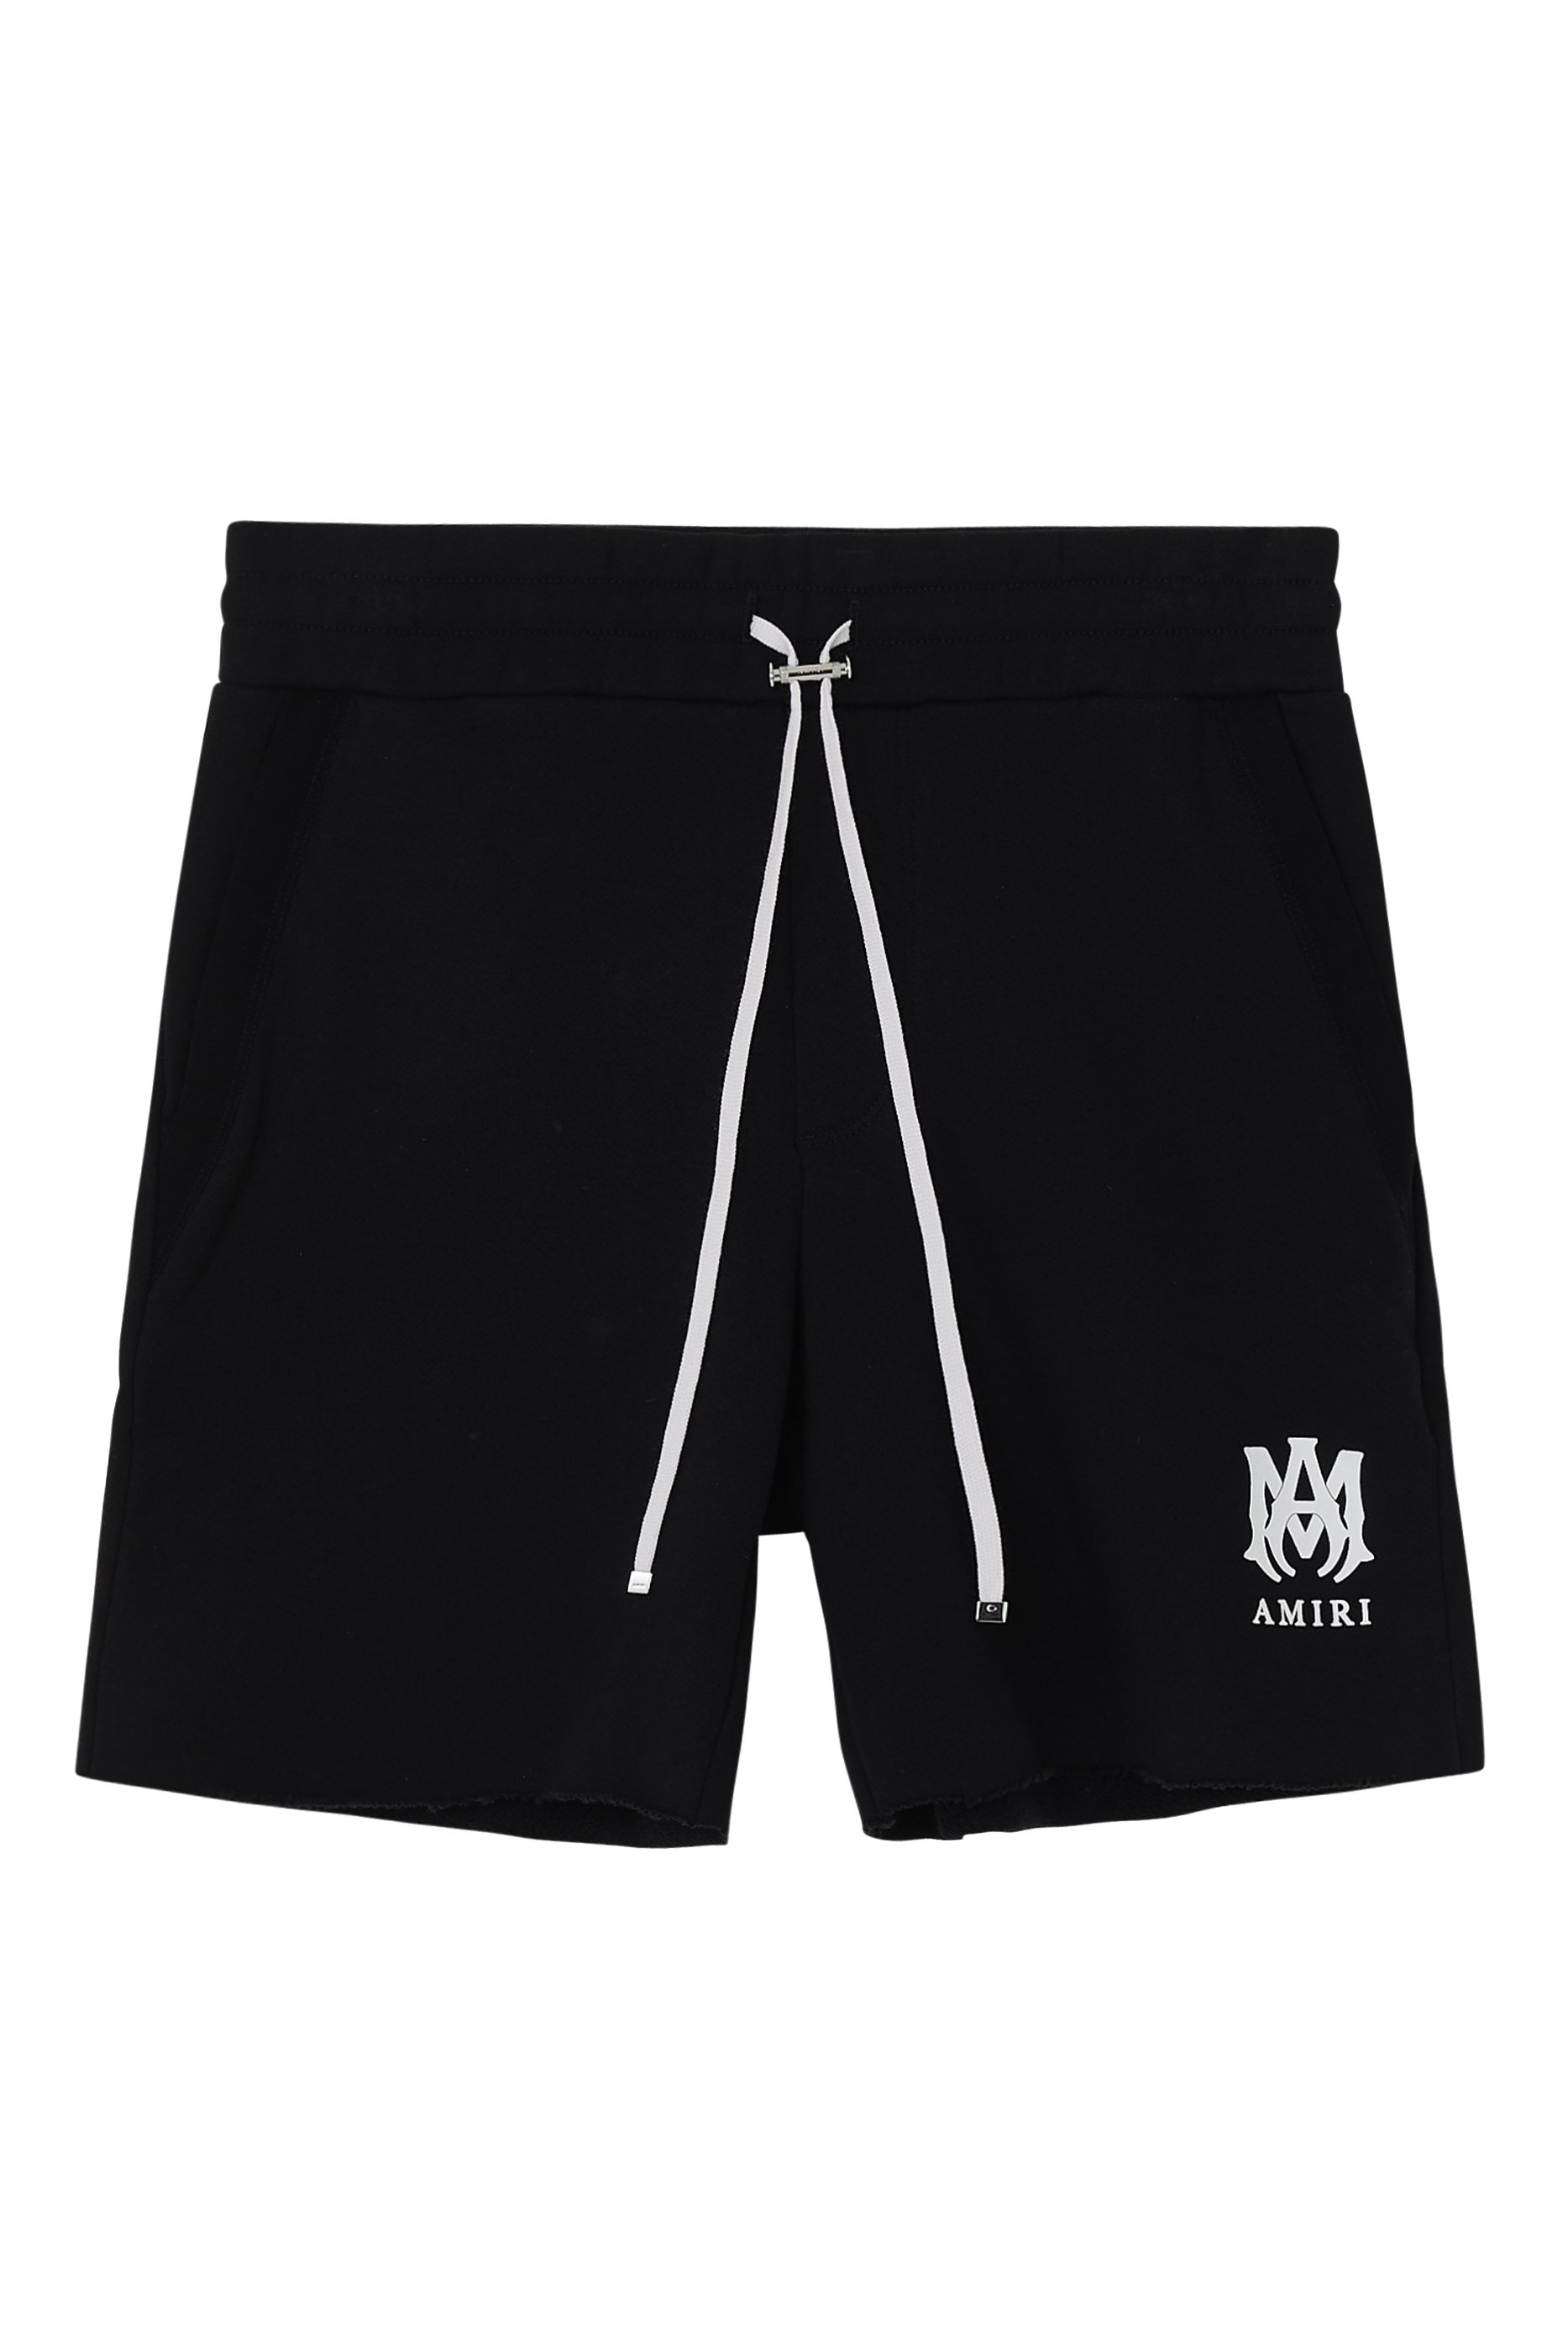 AMIRI Black Core Shorts